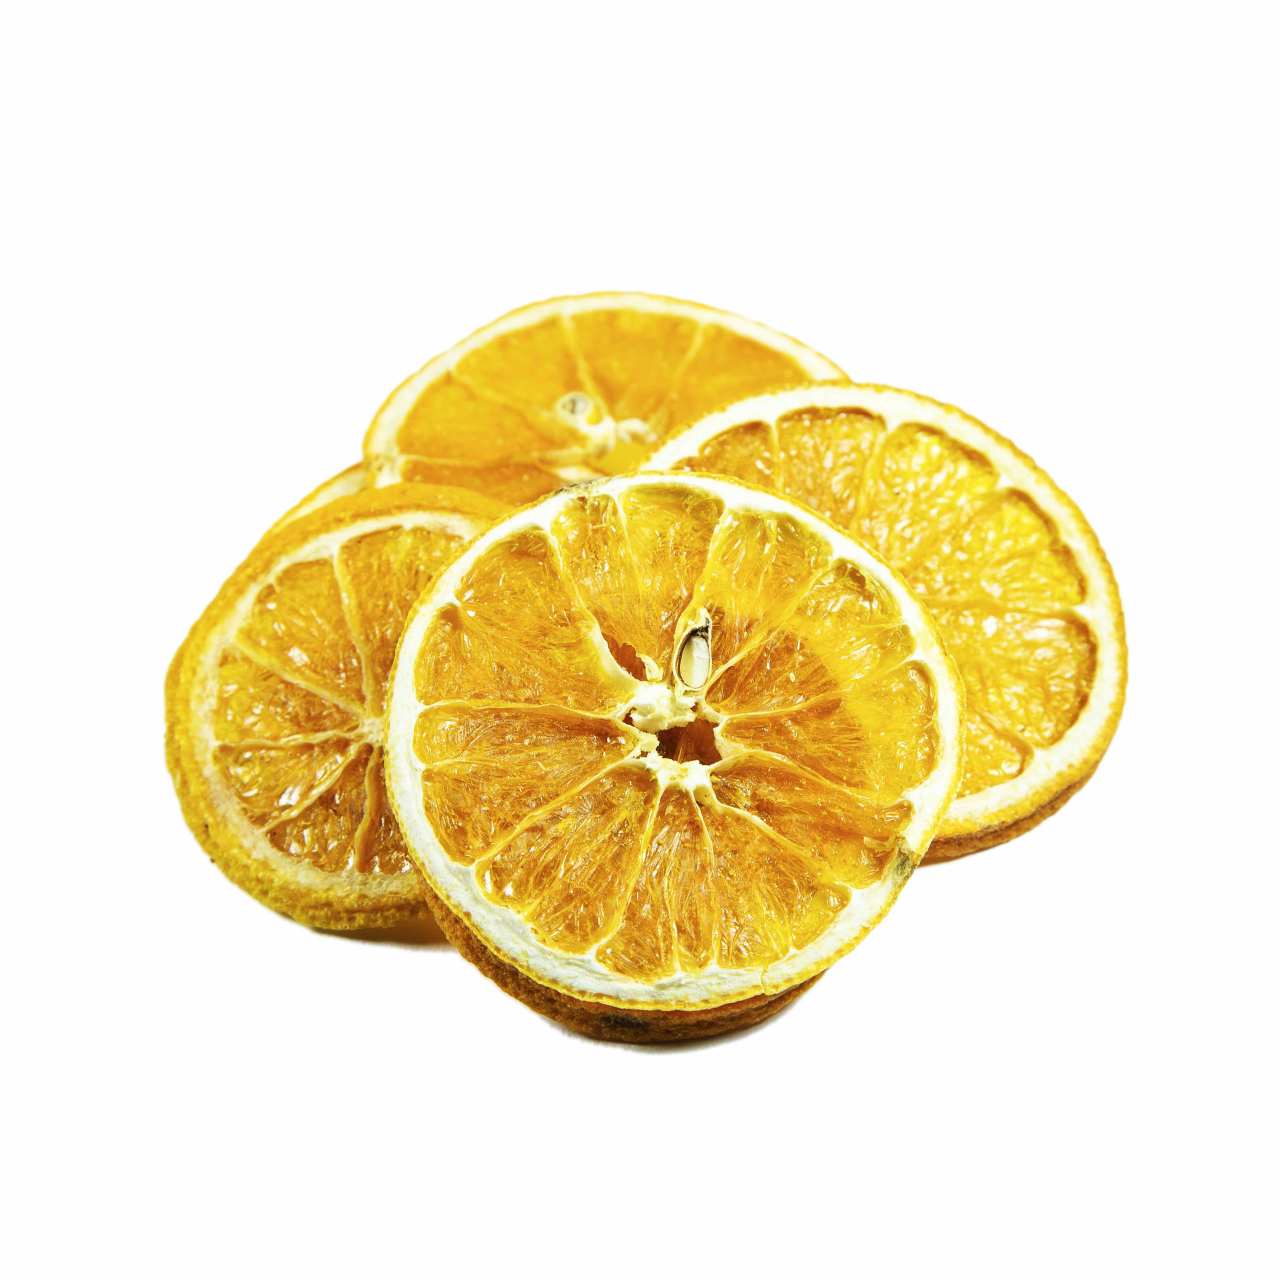 Kurutulmuş Limon Dilimi 25 kg